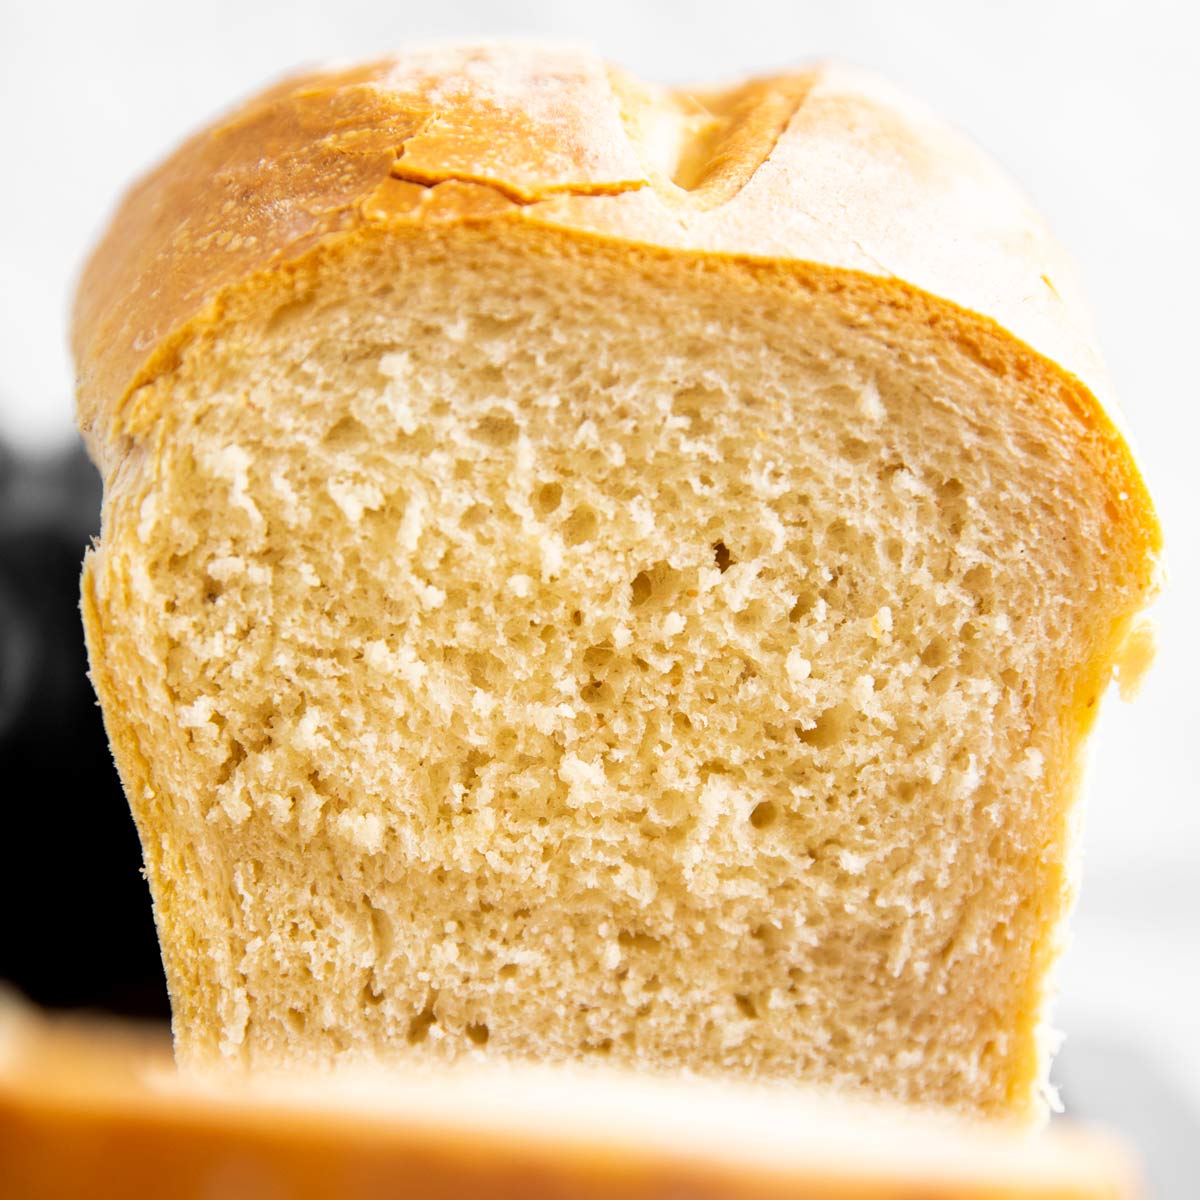 aufgeschnittener Laib Brot